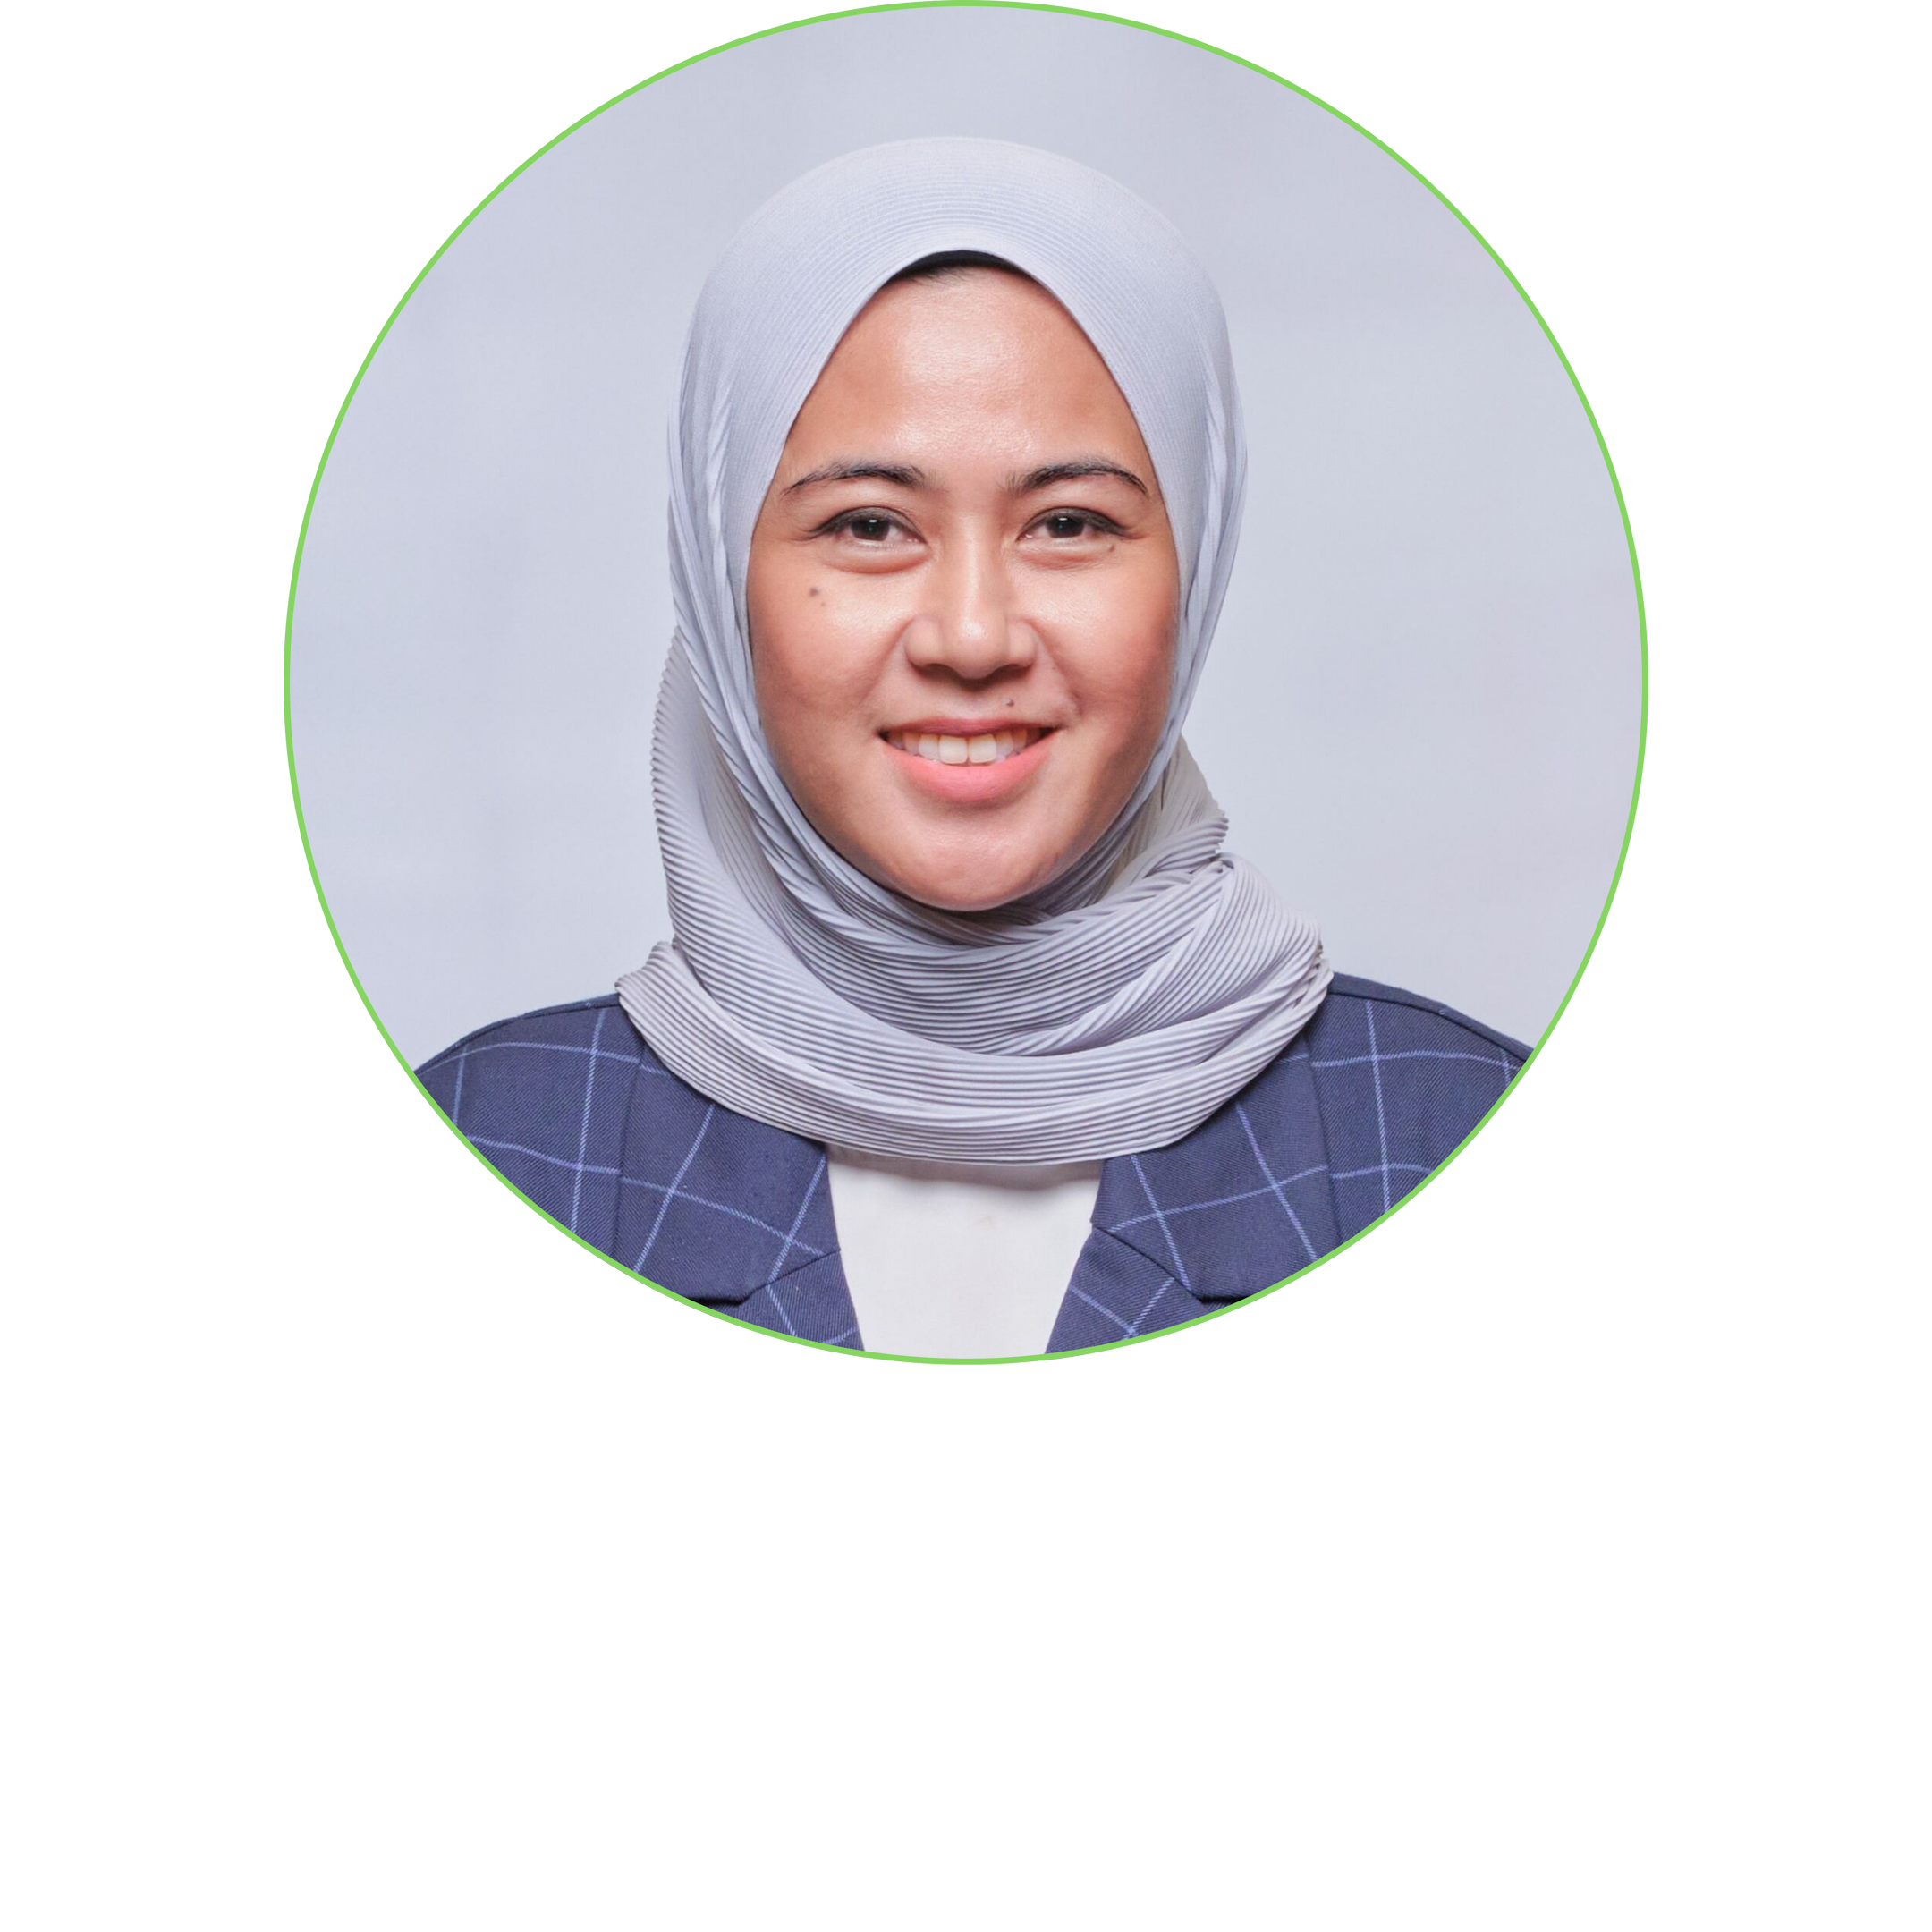 Exxonmobil Nurul Baity Tupon logo